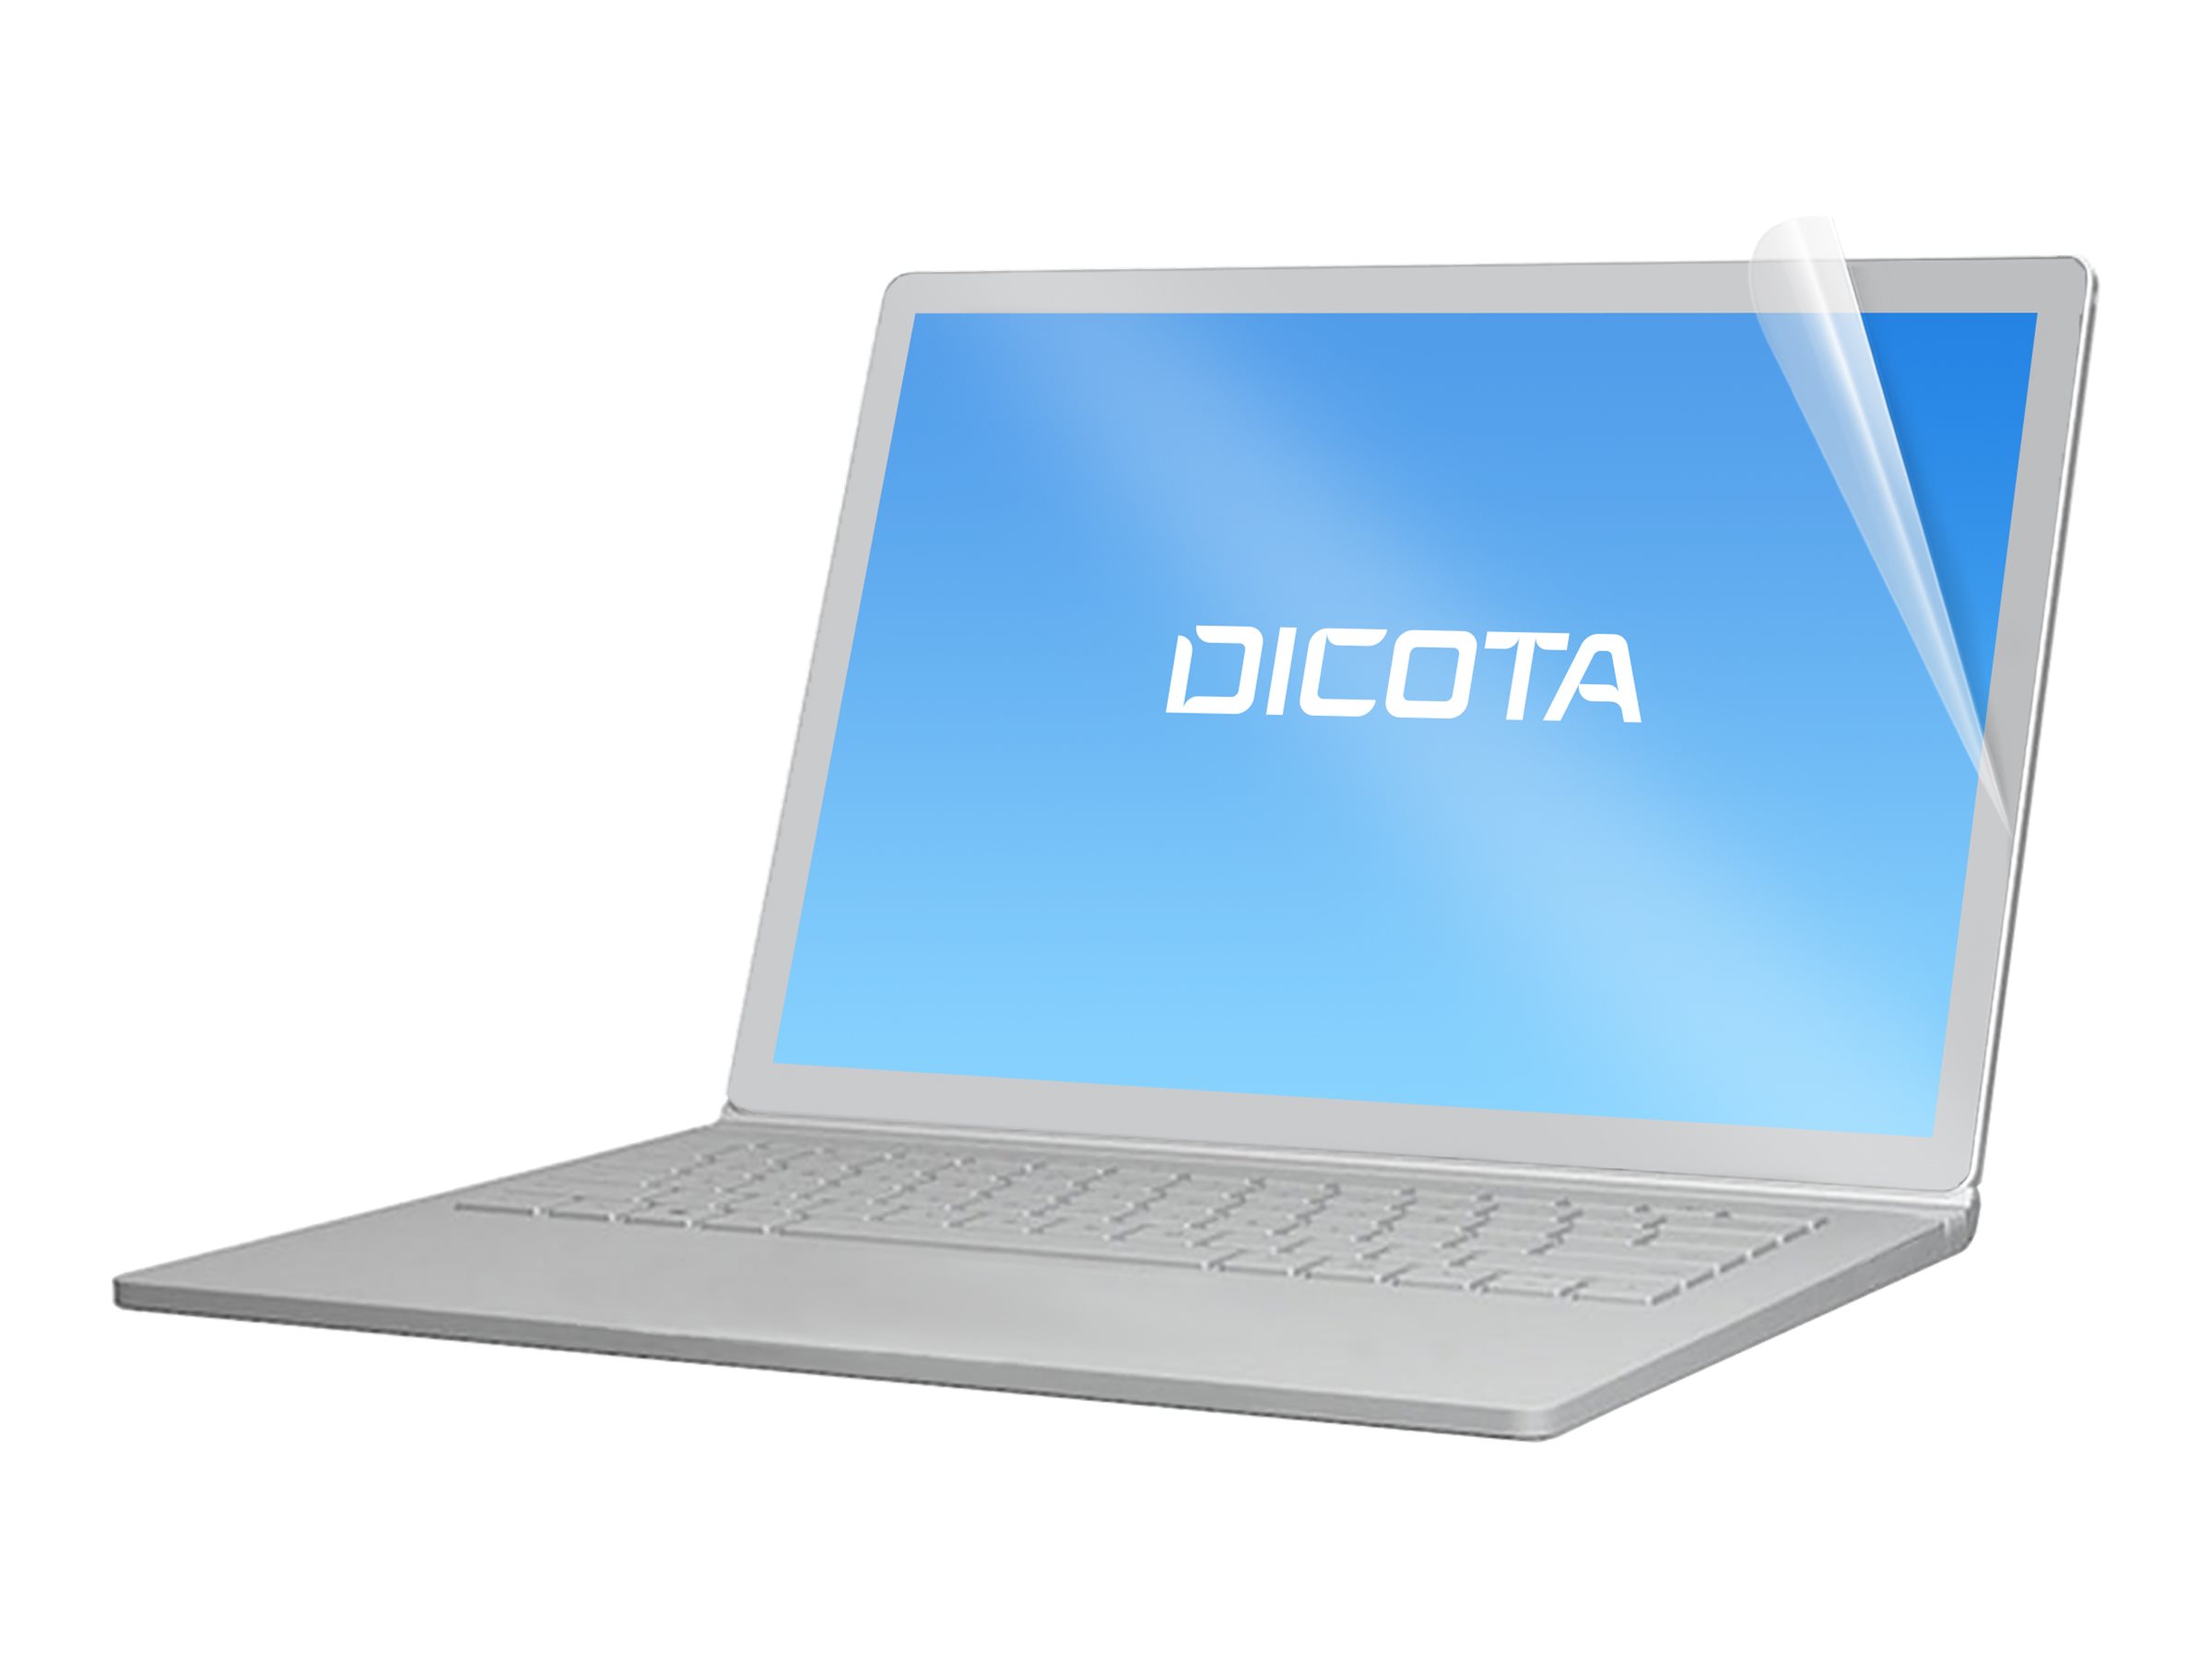 DICOTA Anti-Glare filter 9H for Laptop (D70531)